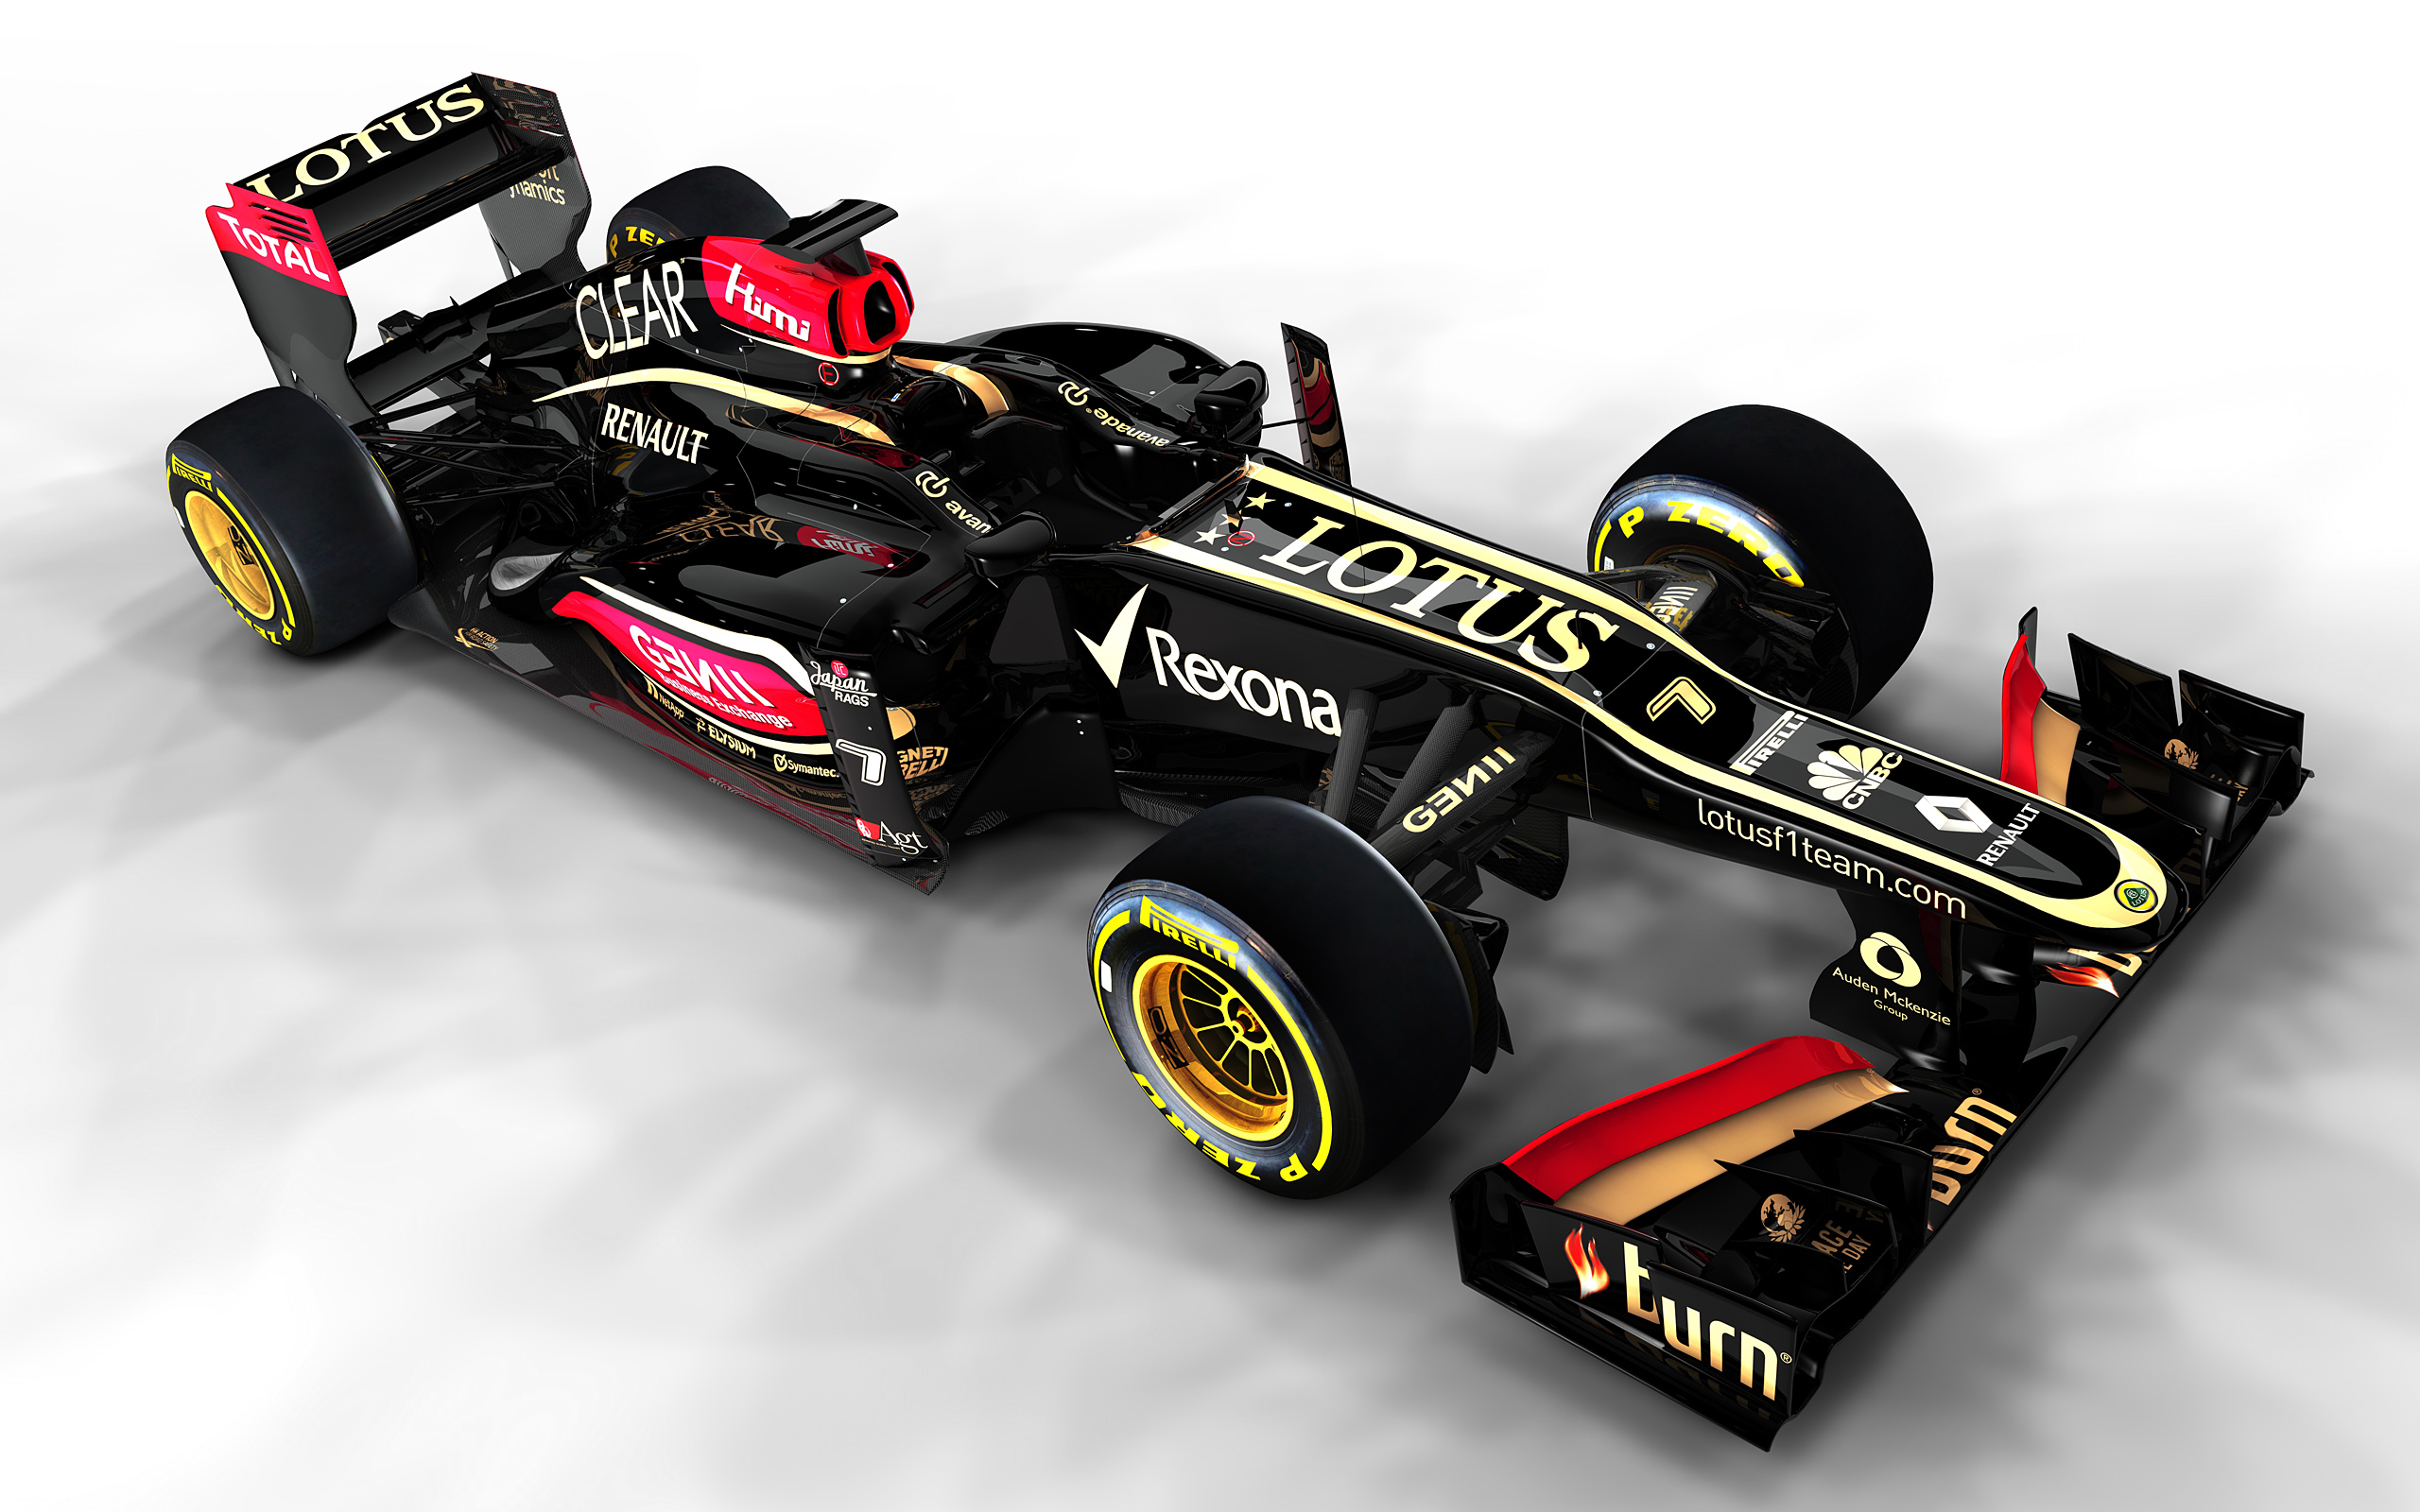  2013 Lotus Renault F1 E21 Wallpaper.